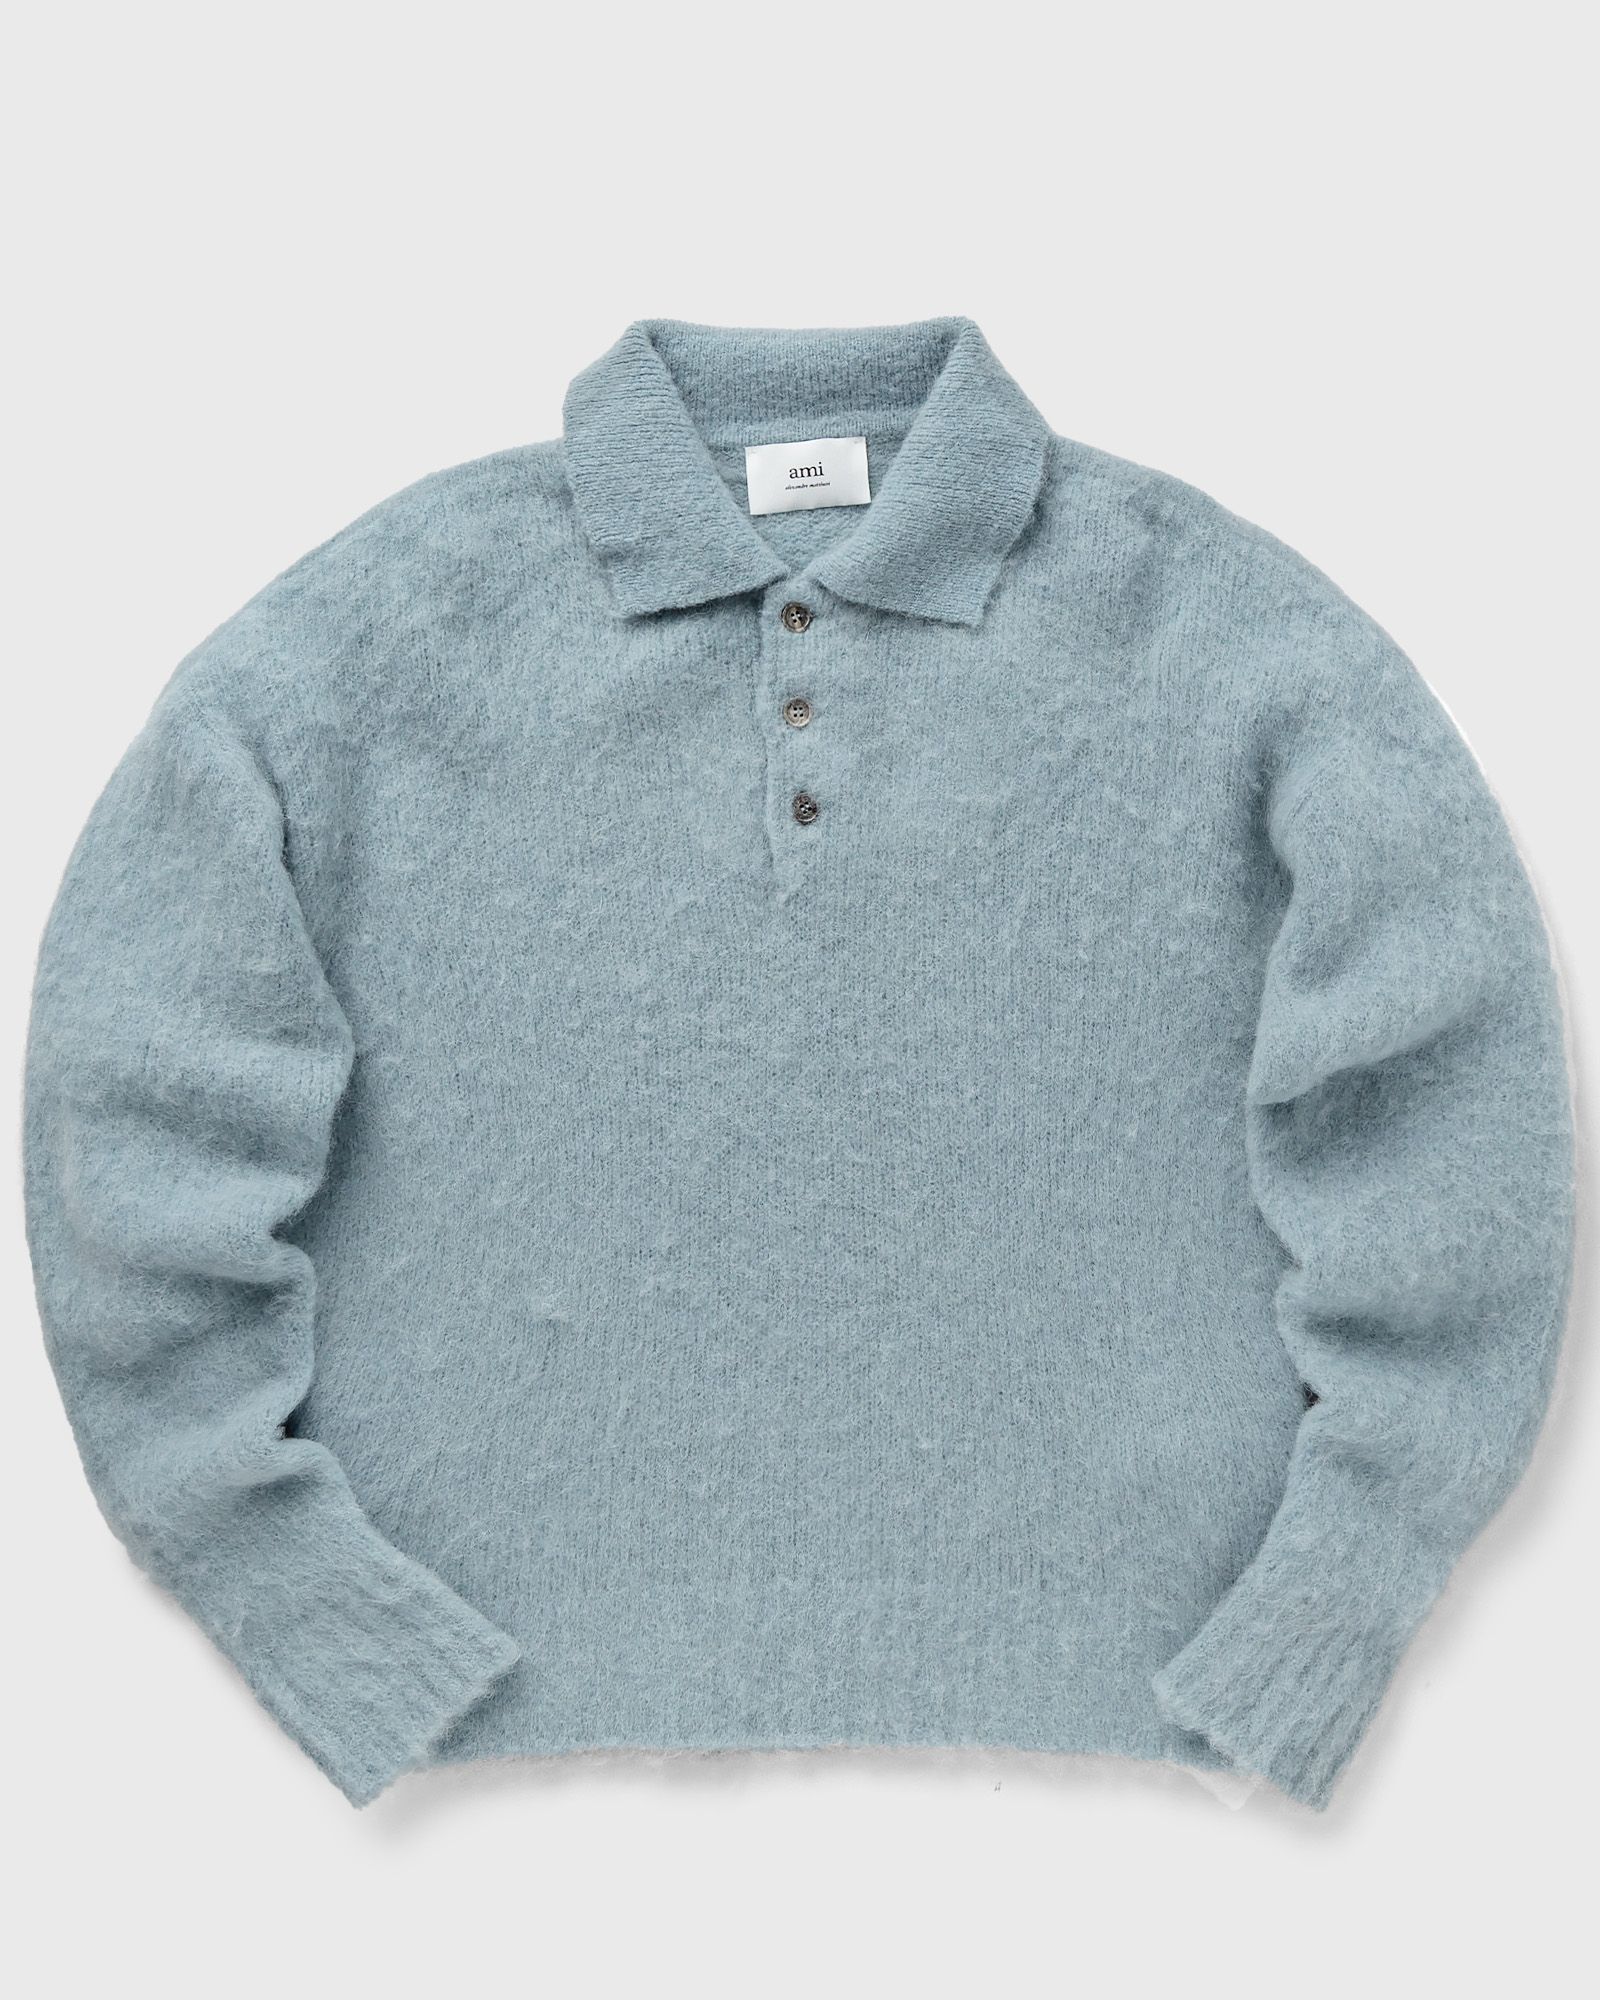 AMI Paris - polo sweater men pullovers blue in größe:xl